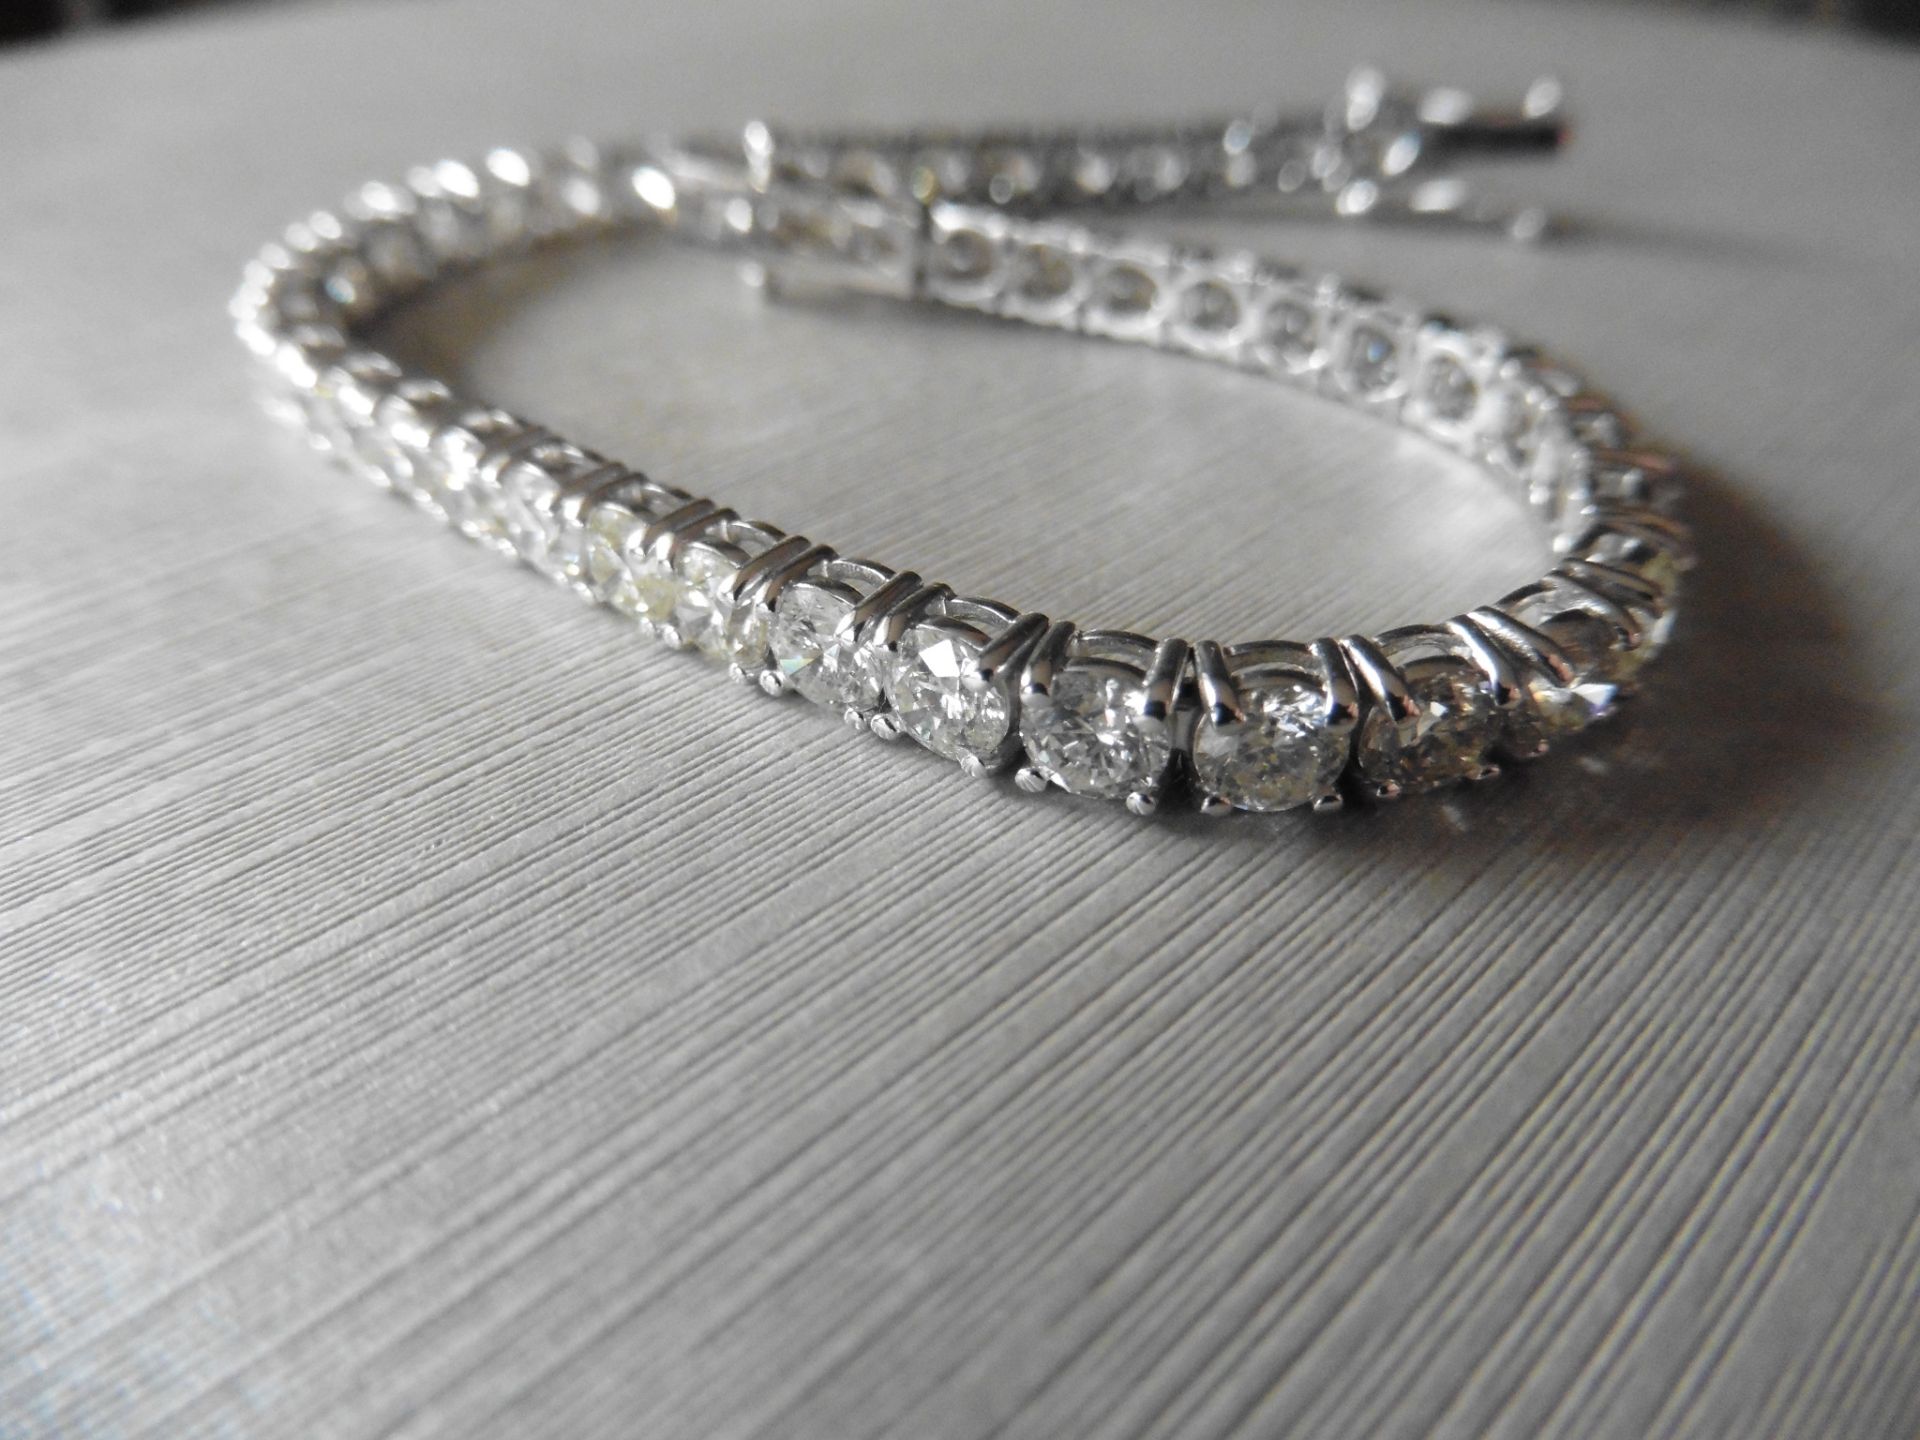 10.50ct Diamond tennis bracelet set with brilliant cut diamonds of I colour, si2 clarity. All set in